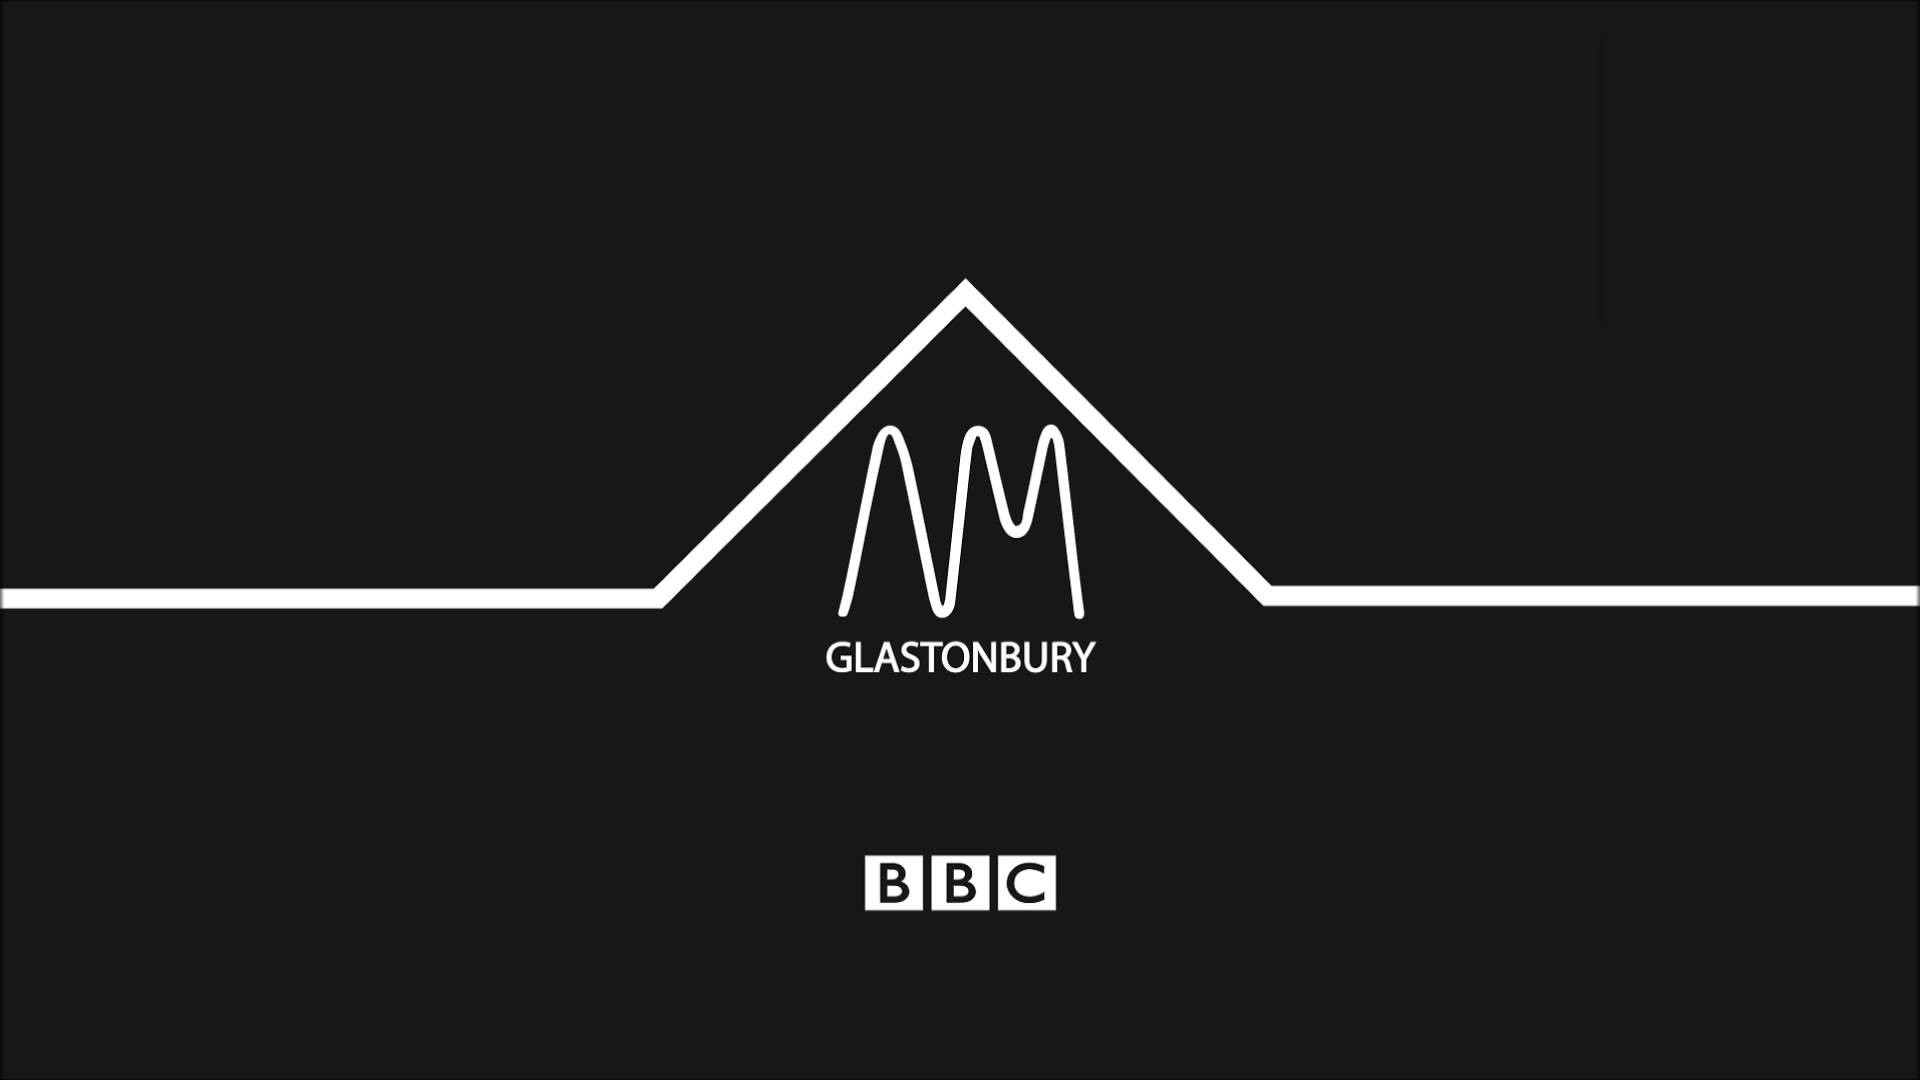 1920x1080 Arctic Monkeys - Live at Glastonbury (2013) [MP3 DOWNLOAD LINK]